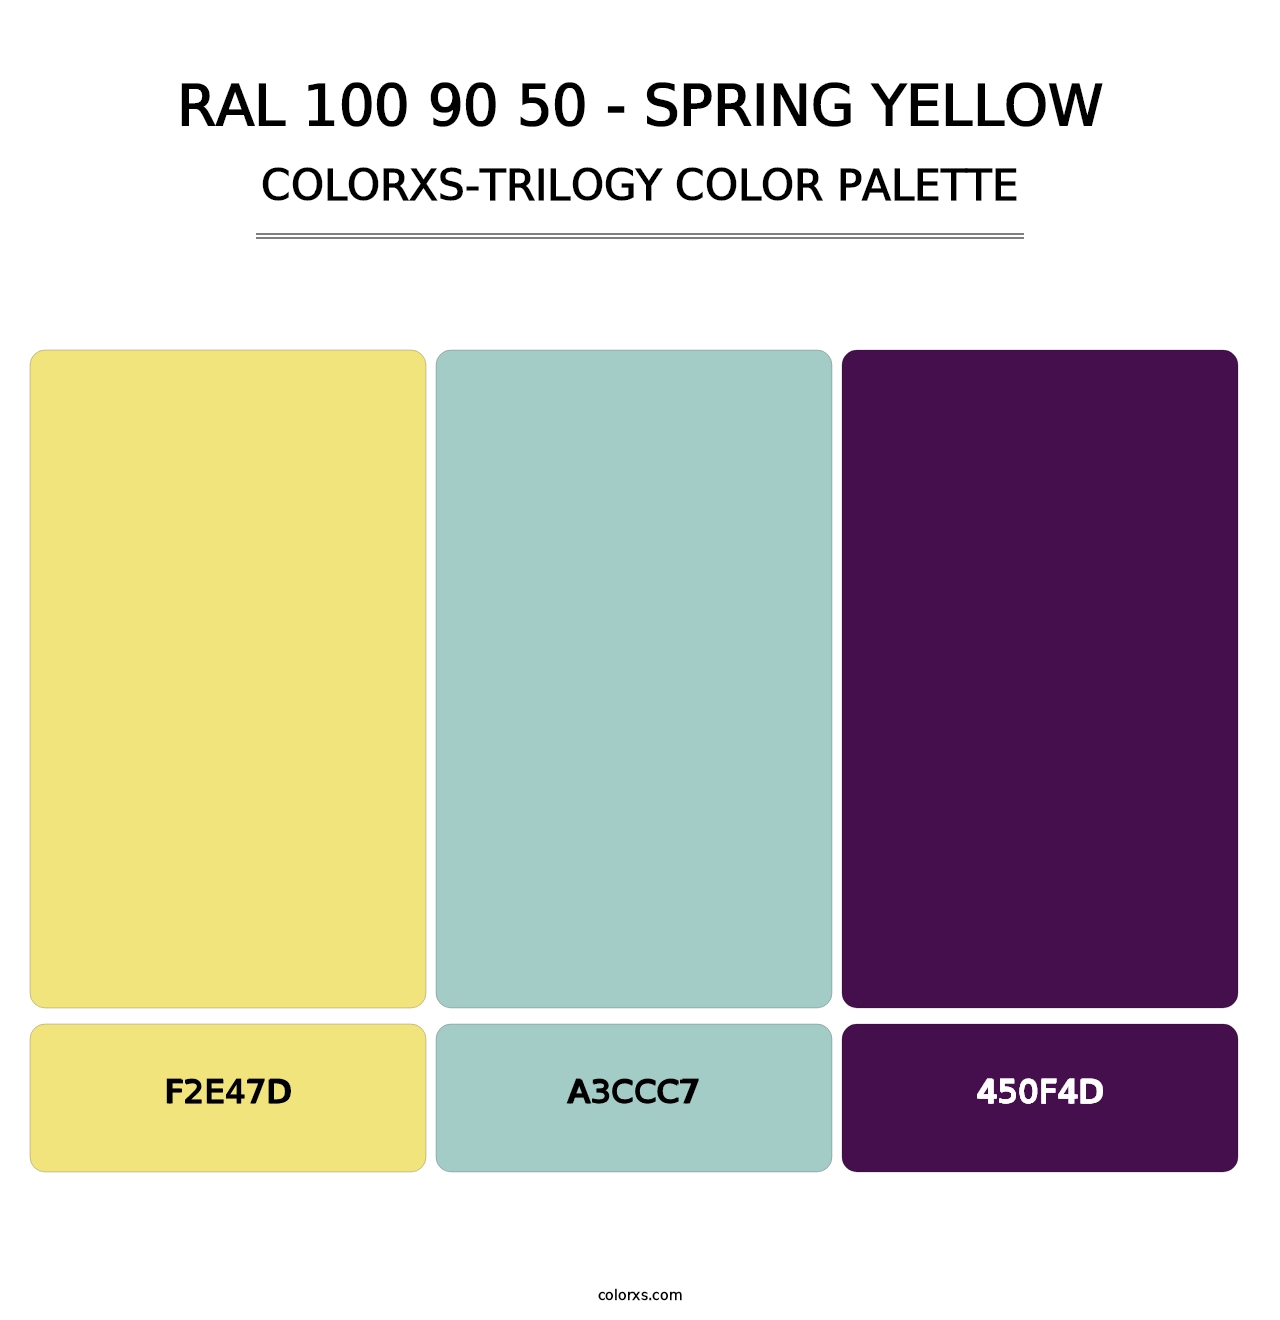 RAL 100 90 50 - Spring Yellow - Colorxs Trilogy Palette